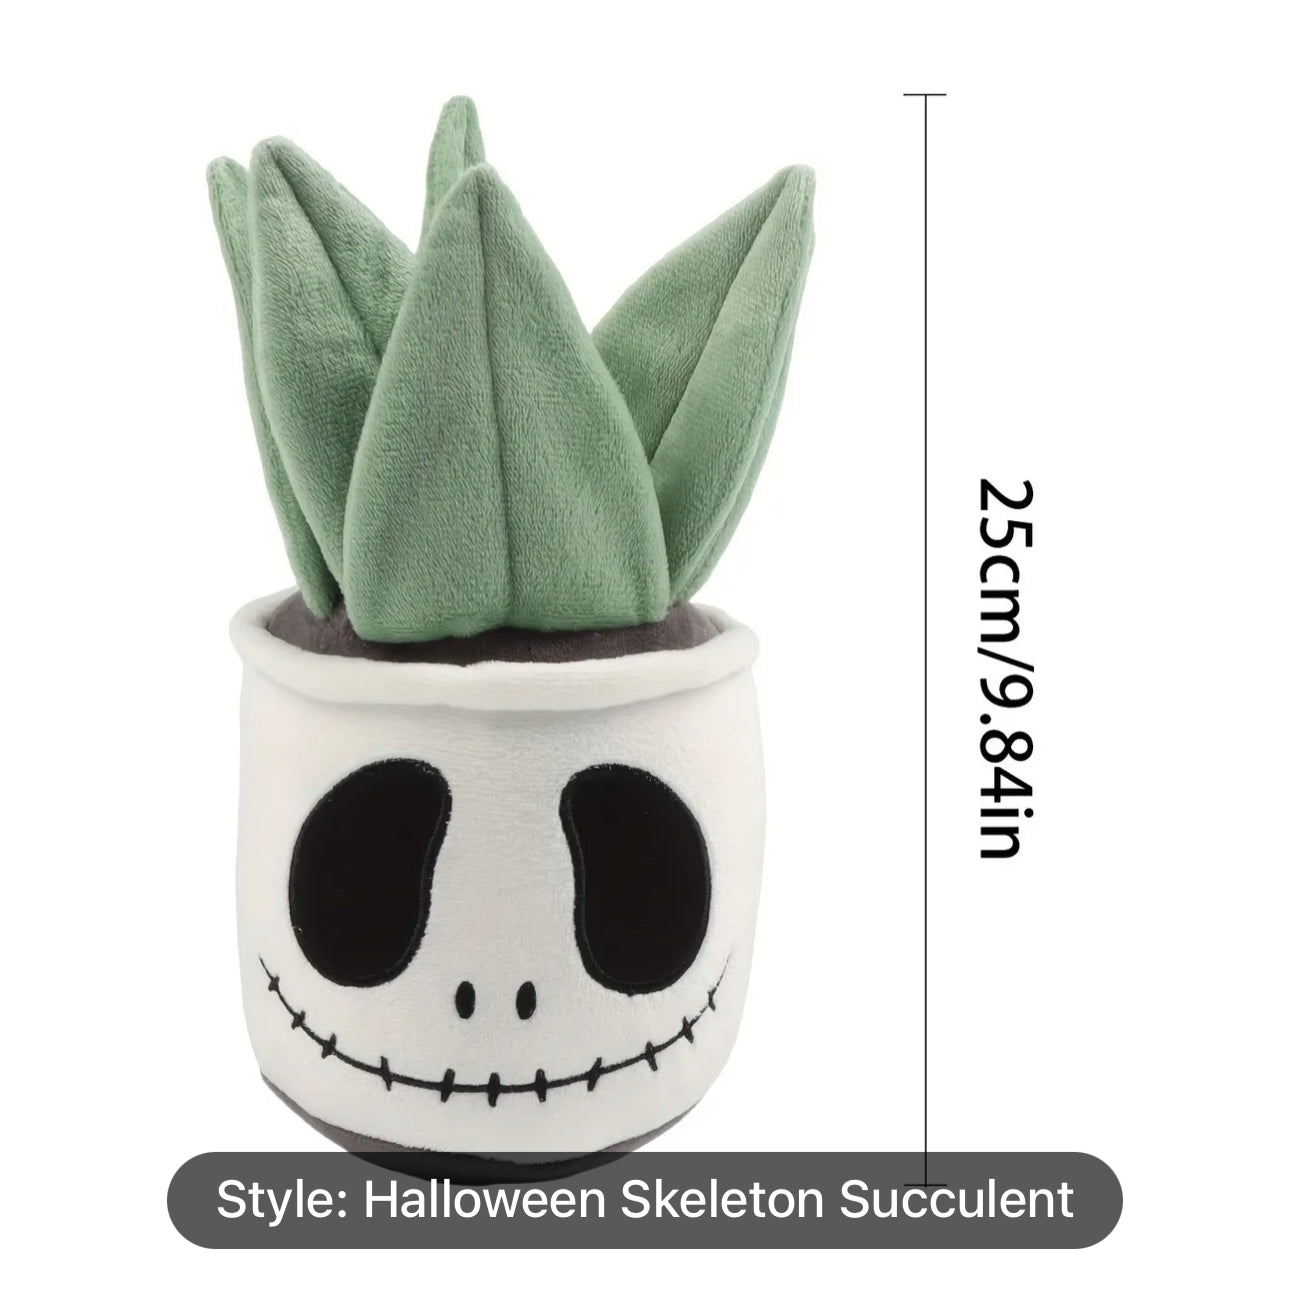 25cm/9.84in Halloween Skeleton Succulent Plant Plush Toys Soft Skeleton Stuffed Toys Potted Plant Toys Halloween Gift For Children Halloween Decor